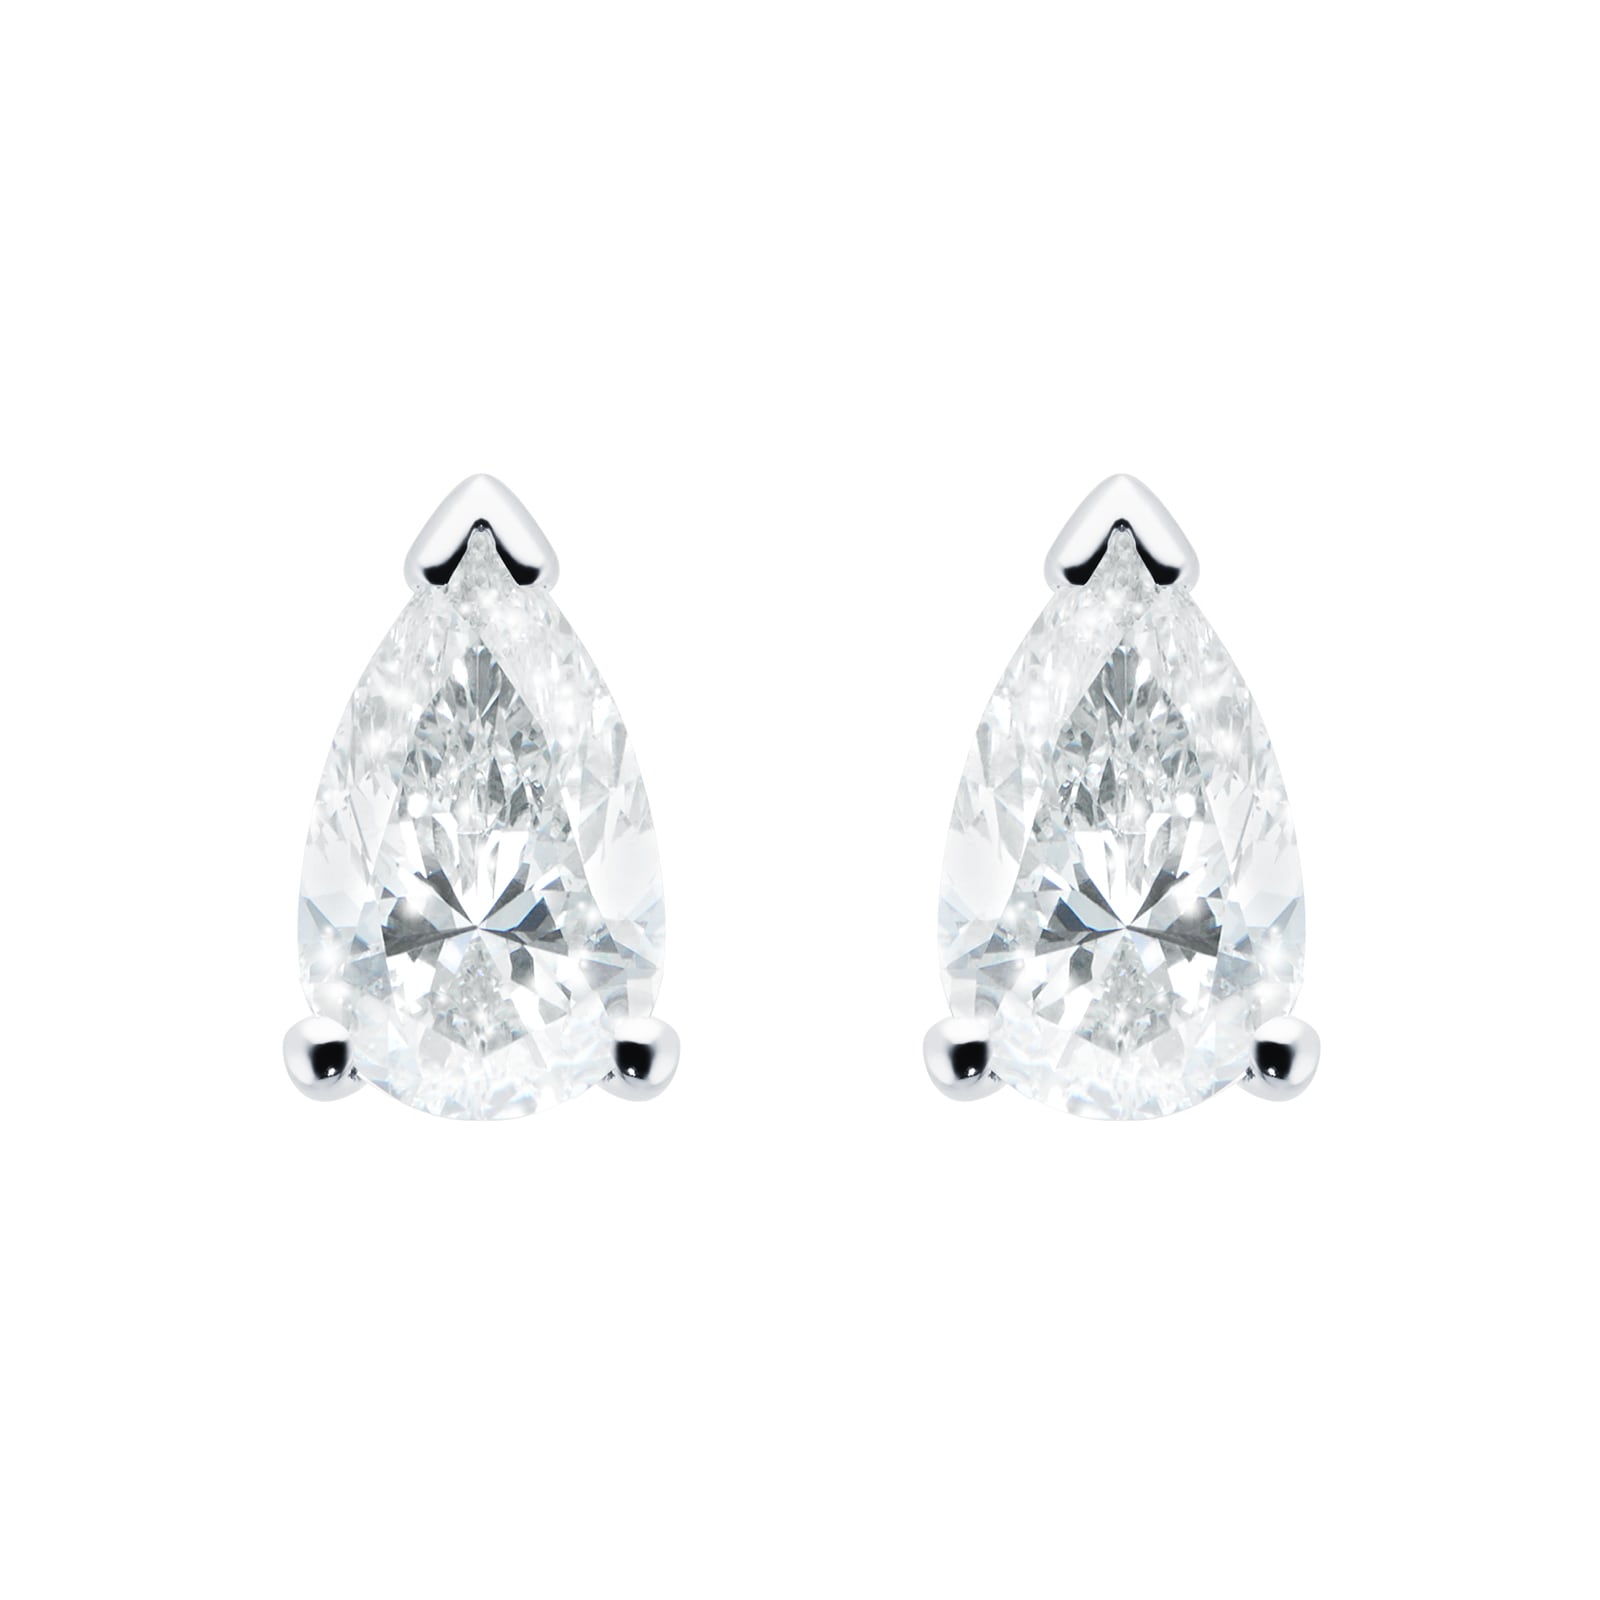 Platinum 1.40cttw Pear Cut Diamond Stud Earrings